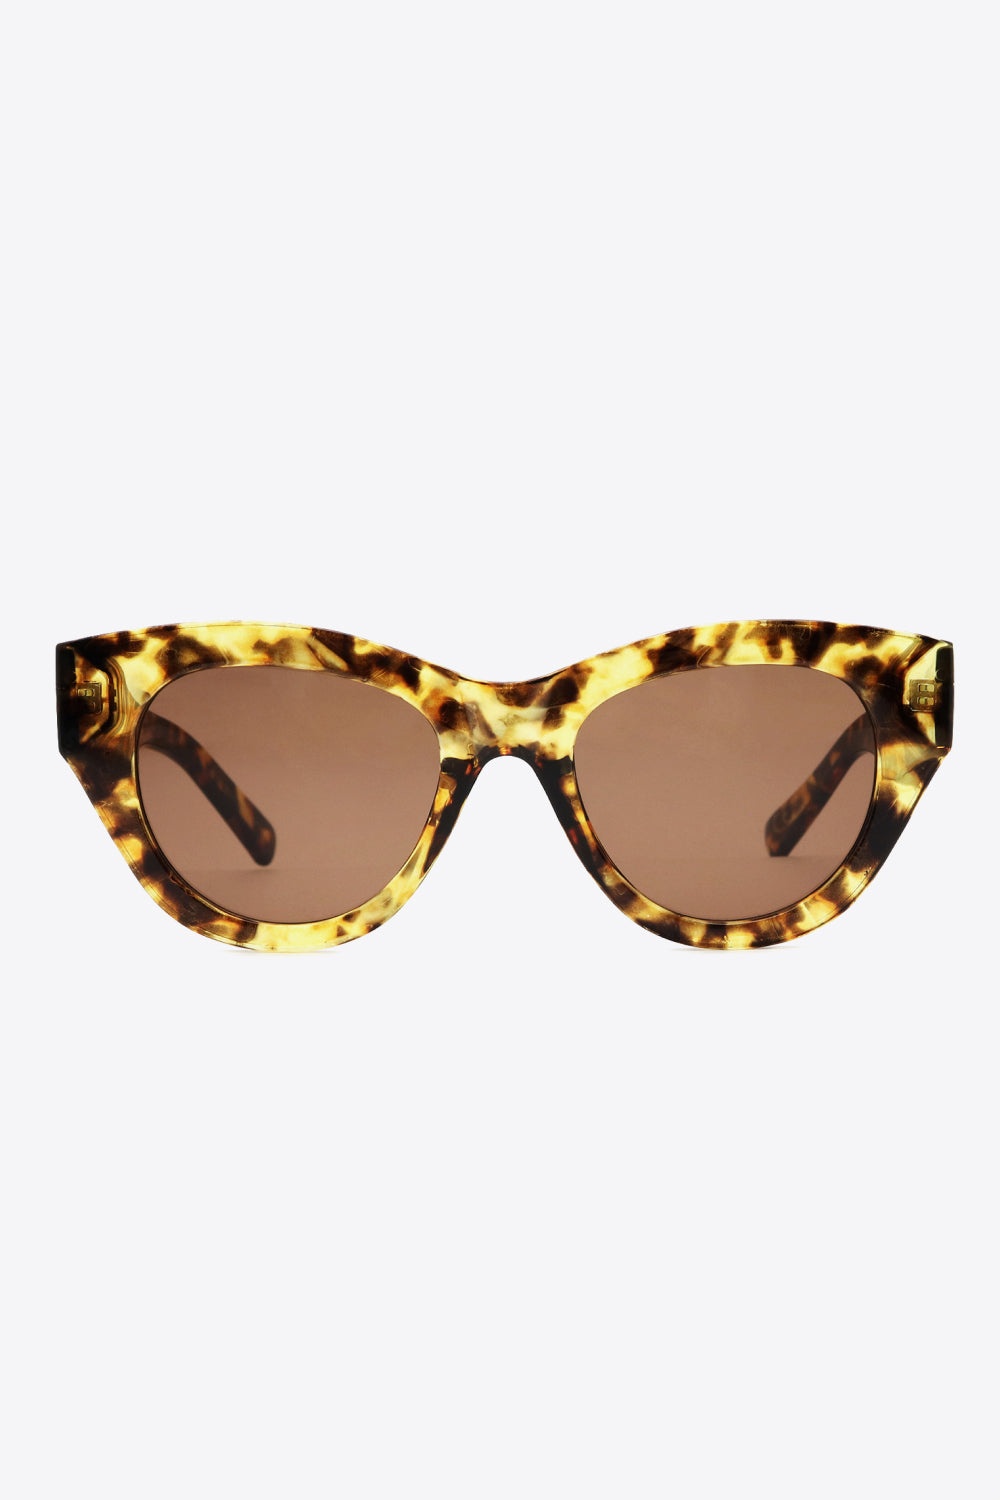 Uylee's Boutique Tortoiseshell Polycarbonate Wayfarer Sunglasses